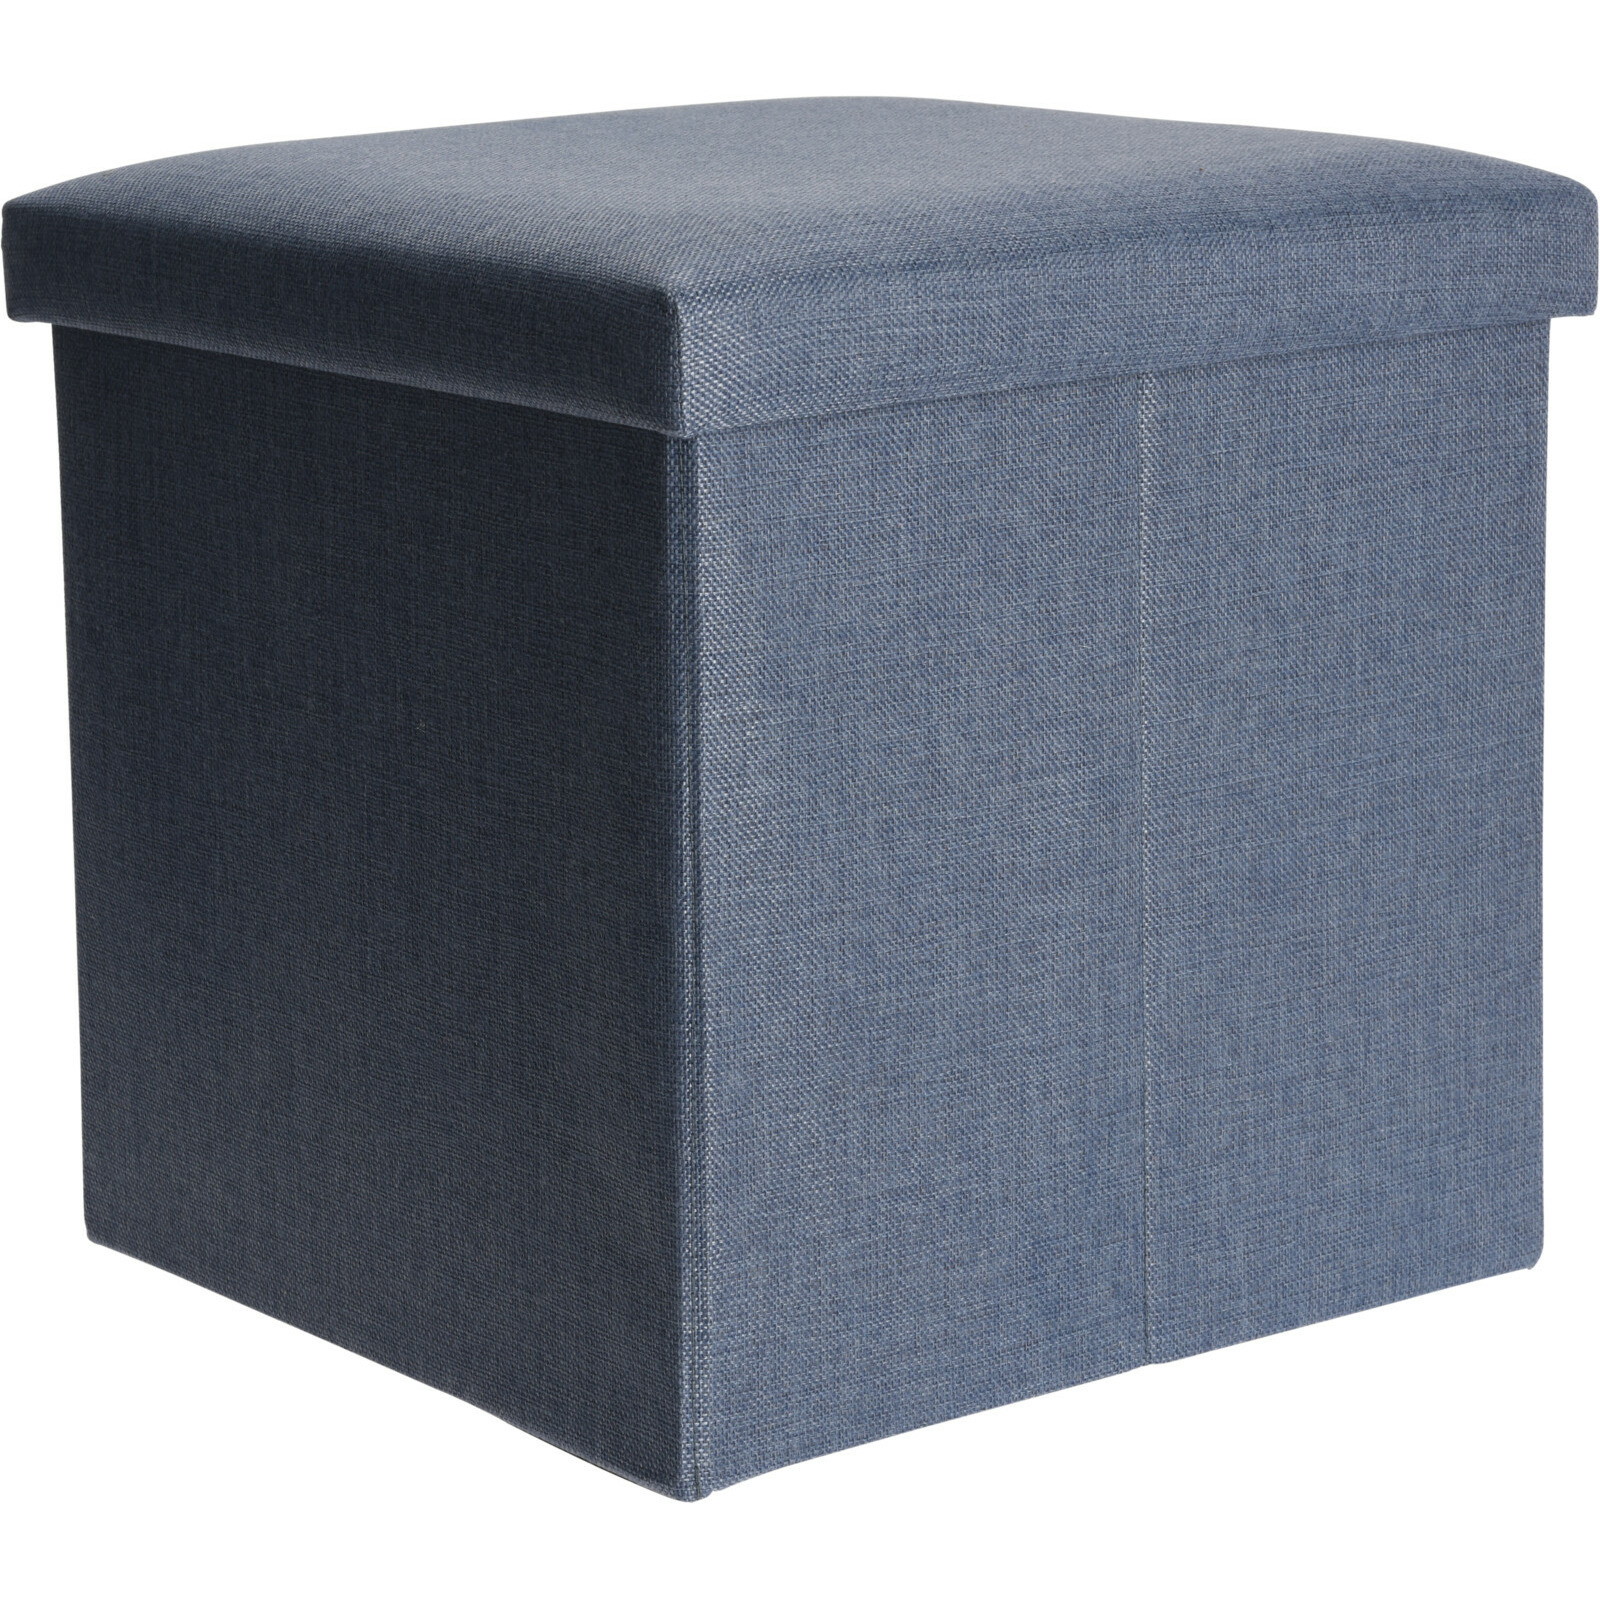 Poef-hocker-krukje opbergbox blauw polyester 38 x 38 cm opvouwbaar